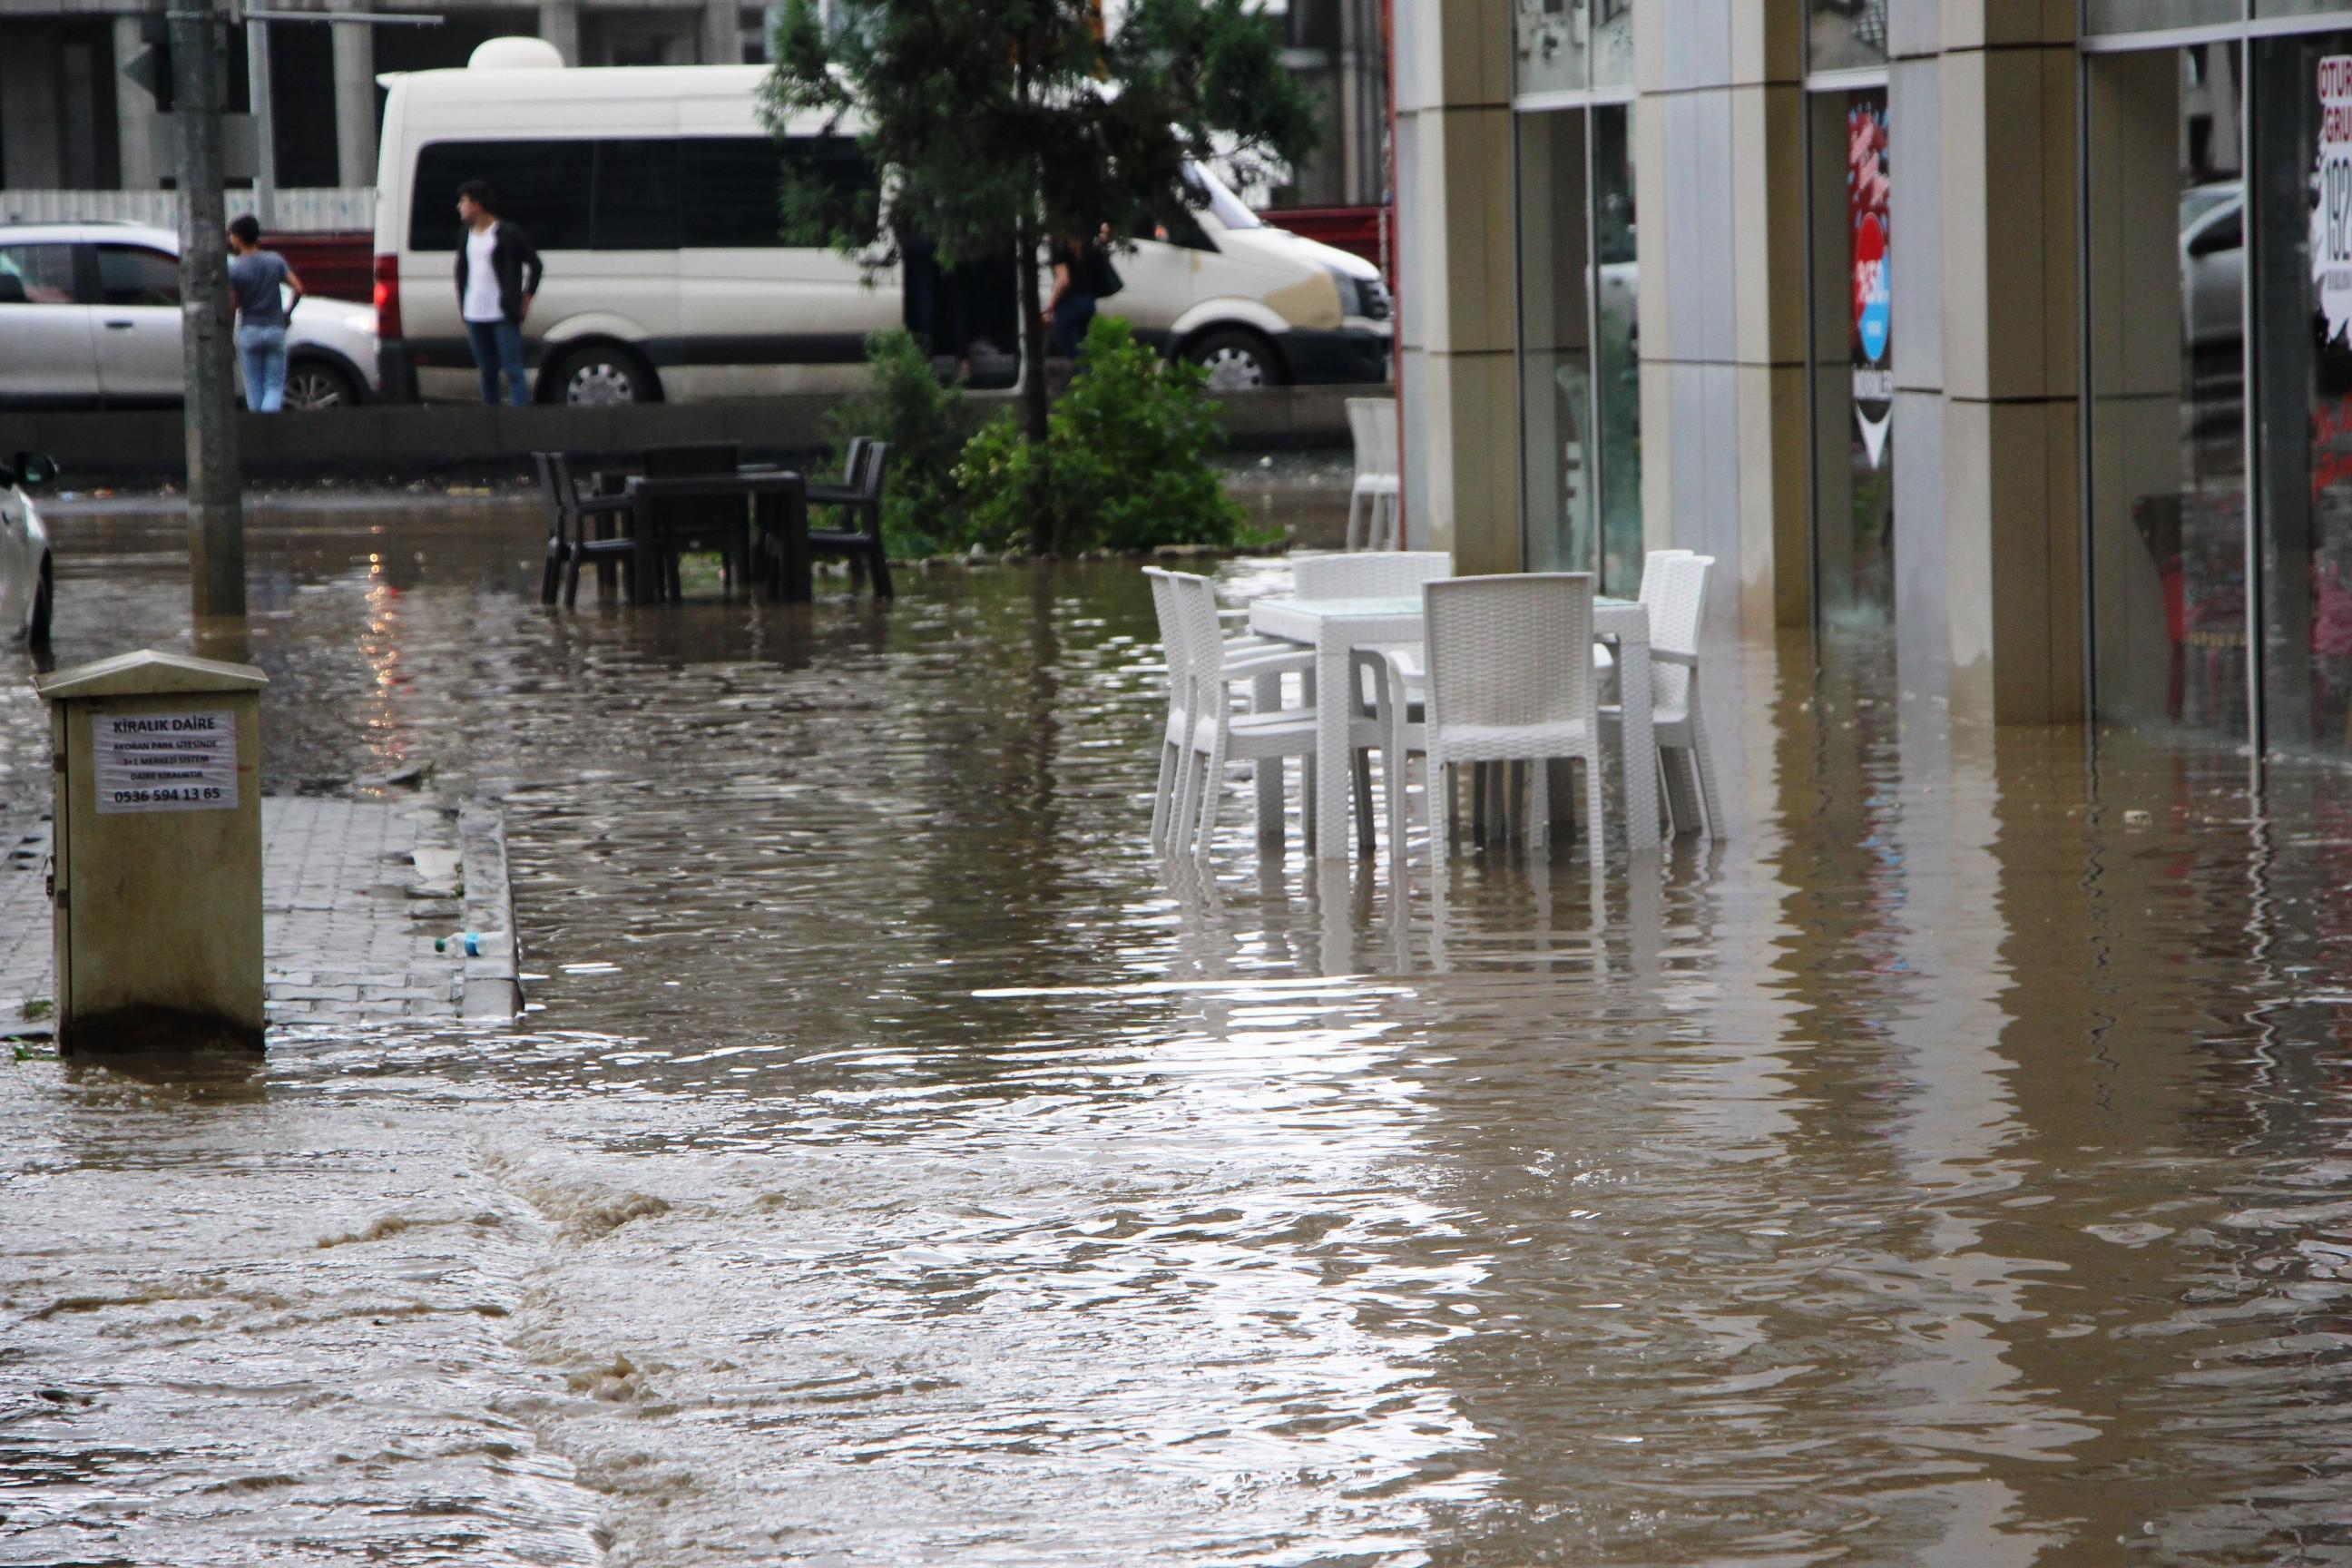 Trabzon’da aşırı yağış rögarları taşırdı